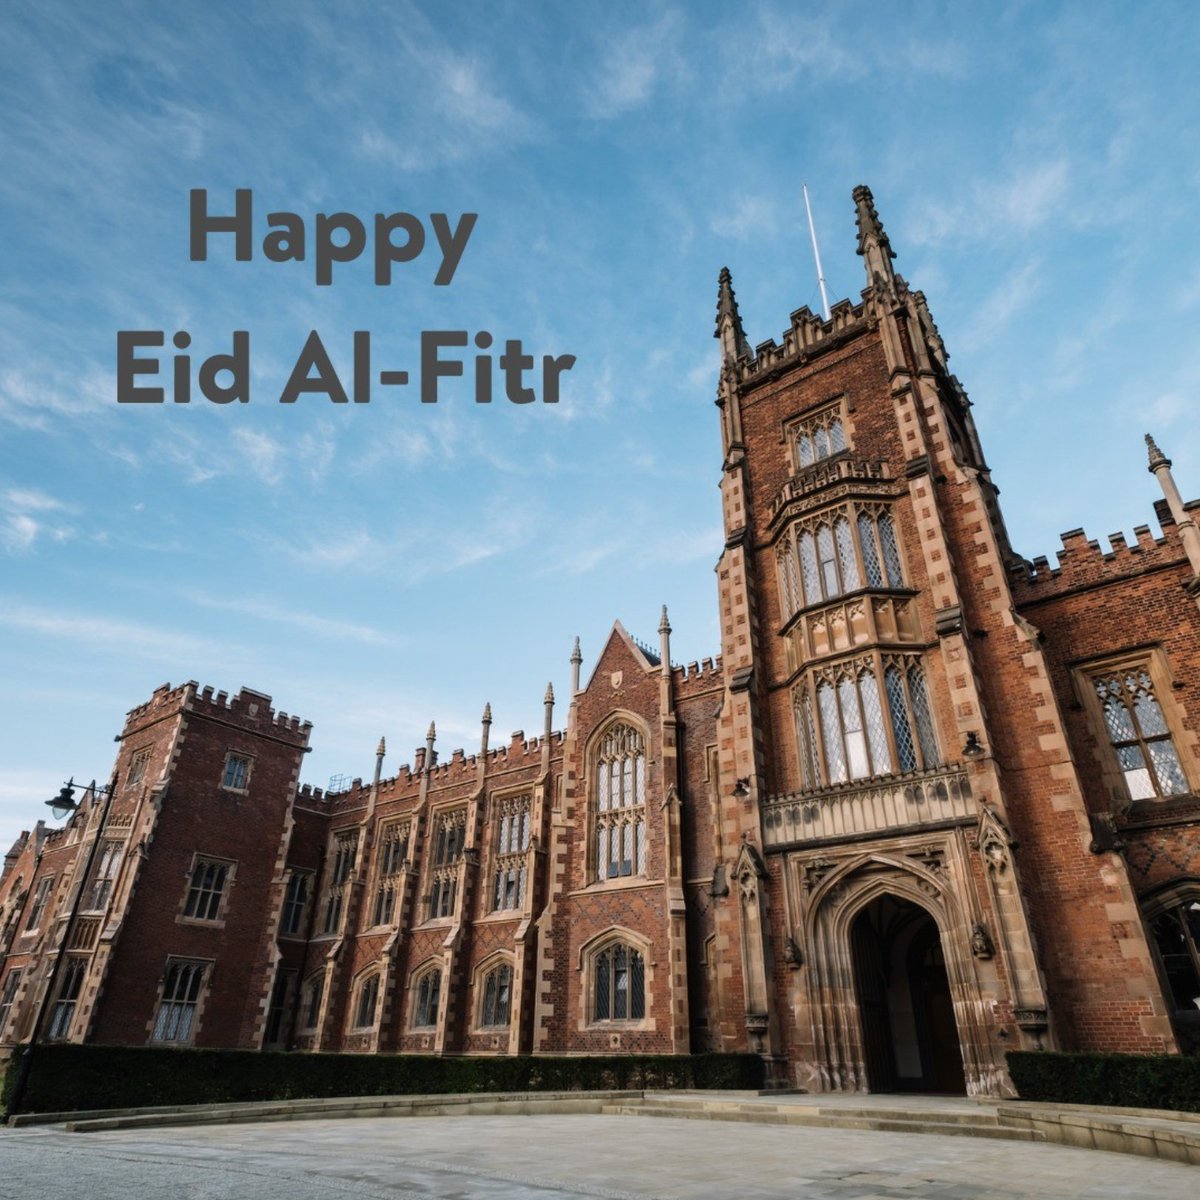 Wishing all of our students, @QUBstaff, @QUBAlumni and friends who are celebrating today, a Happy Eid al-Fitr. Eid Mubarak. #LoveQUB